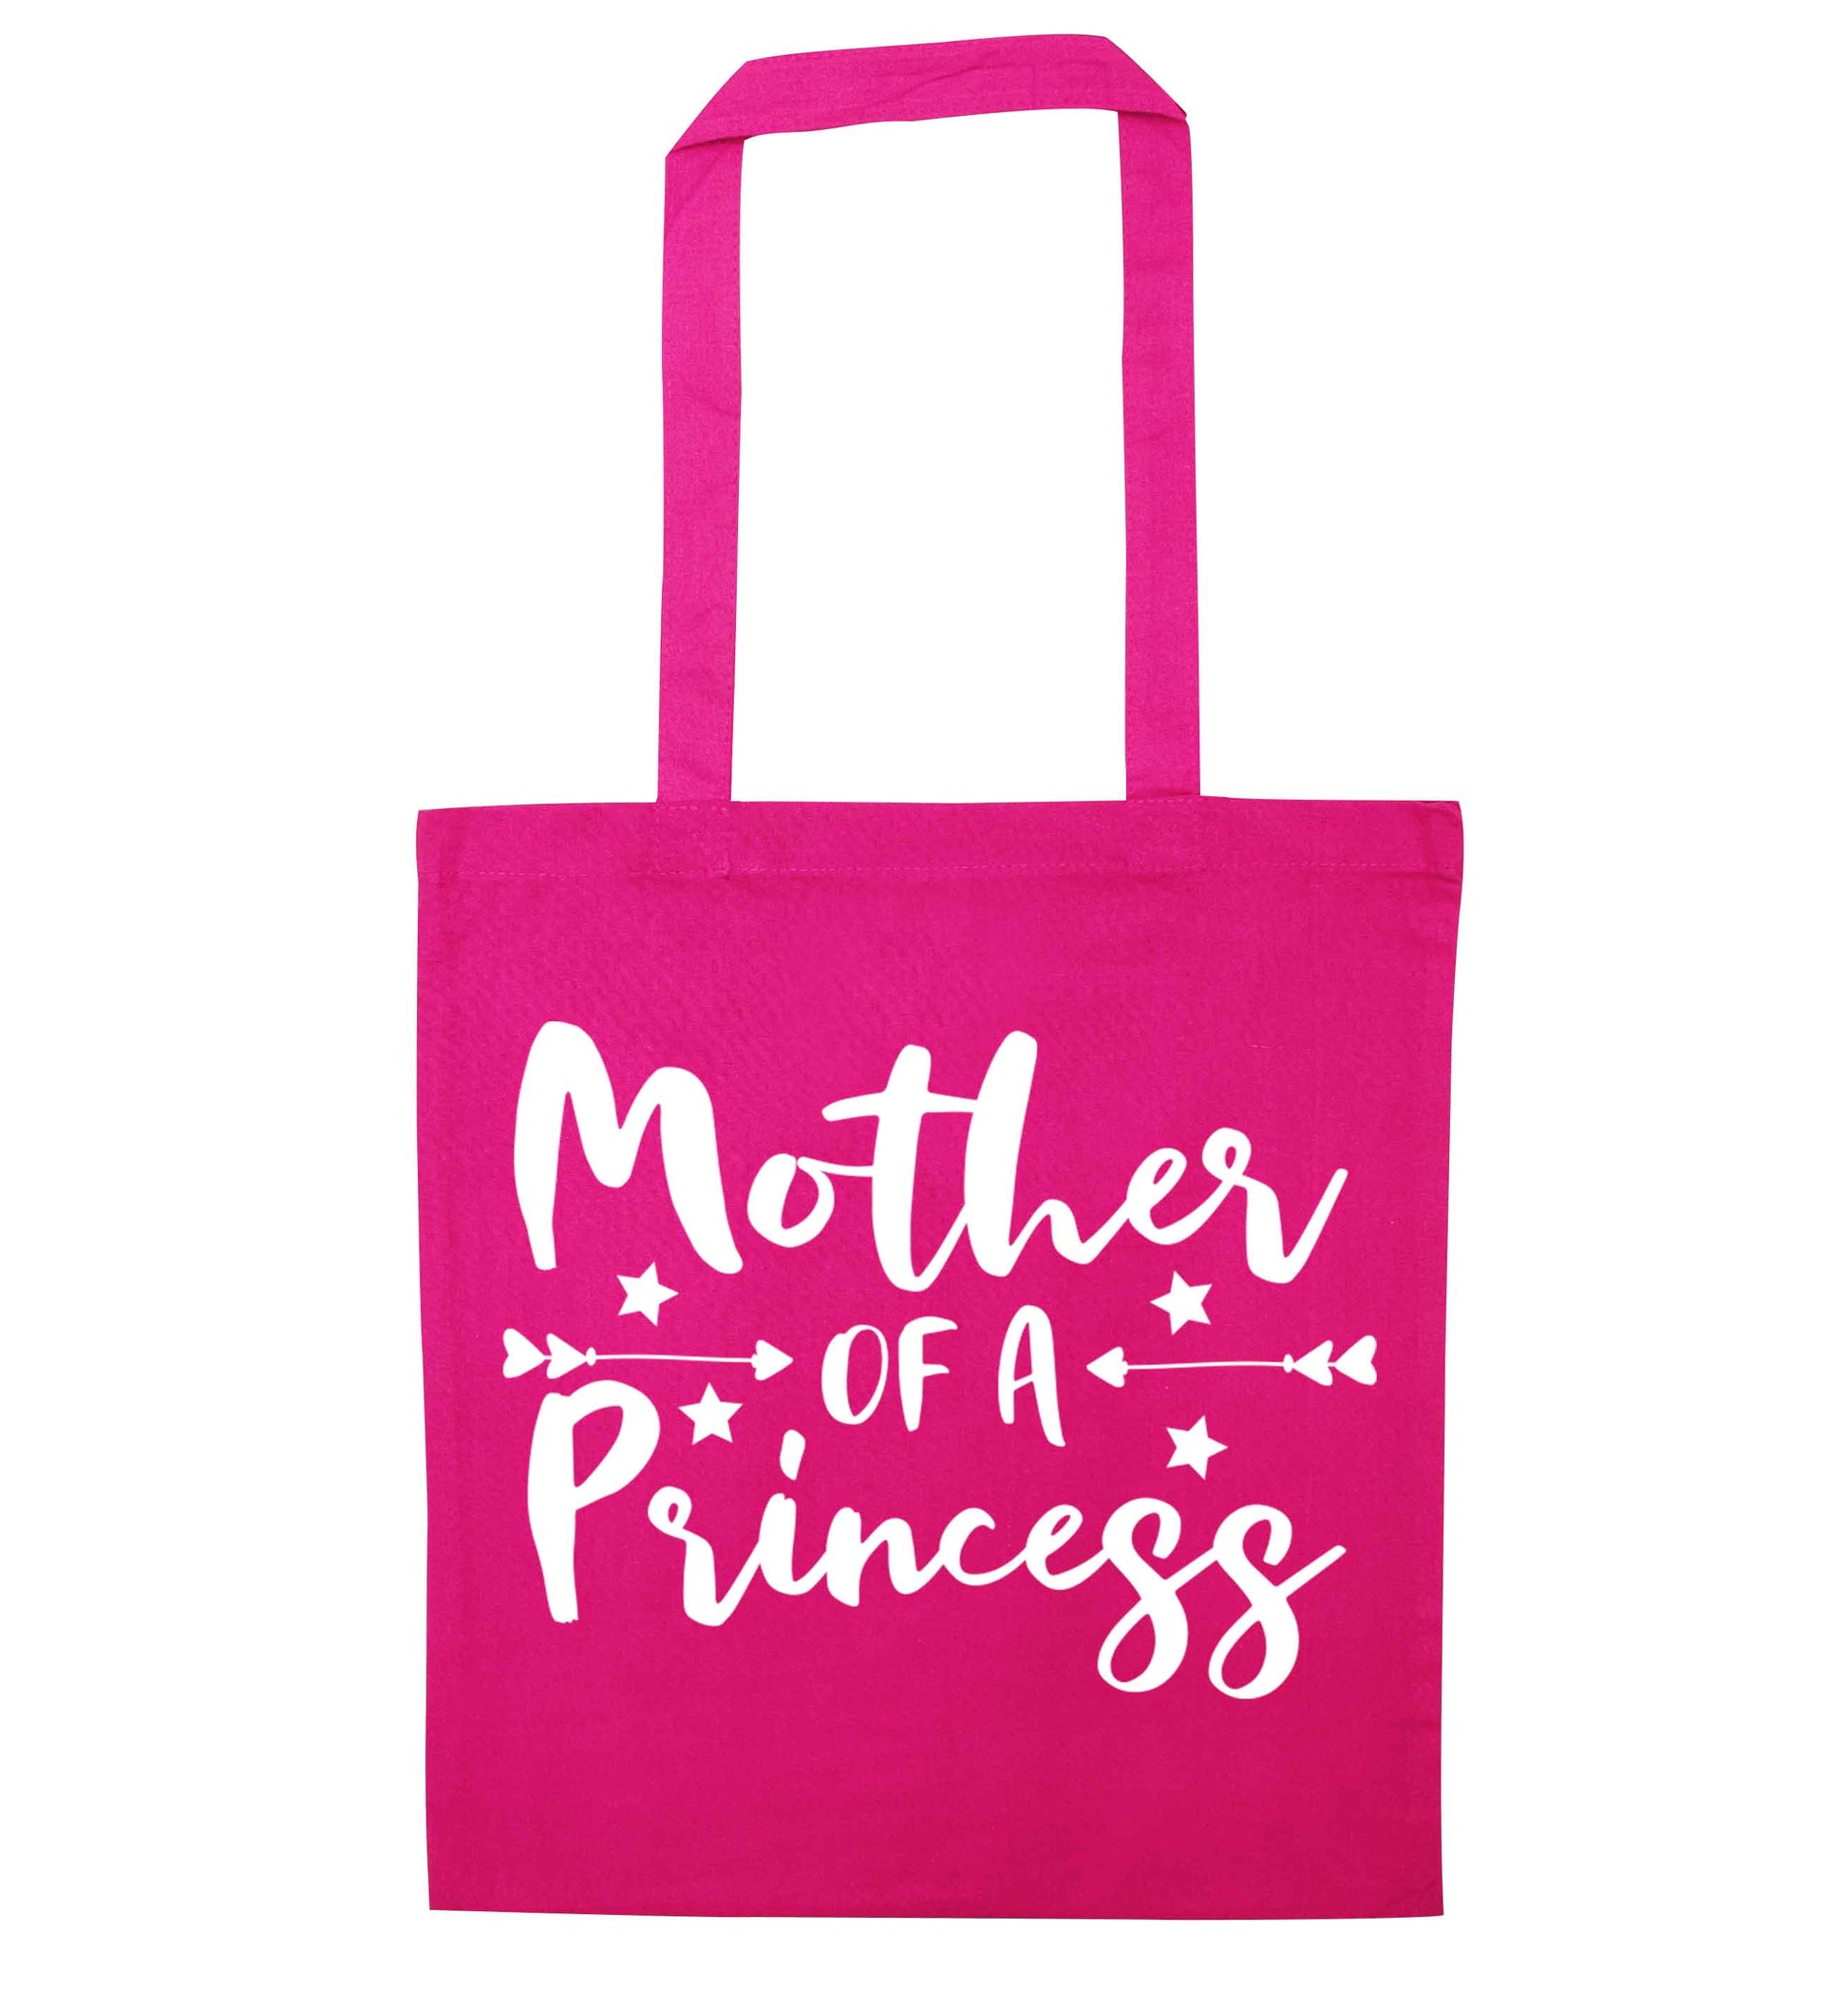 Mother of a princess pink tote bag